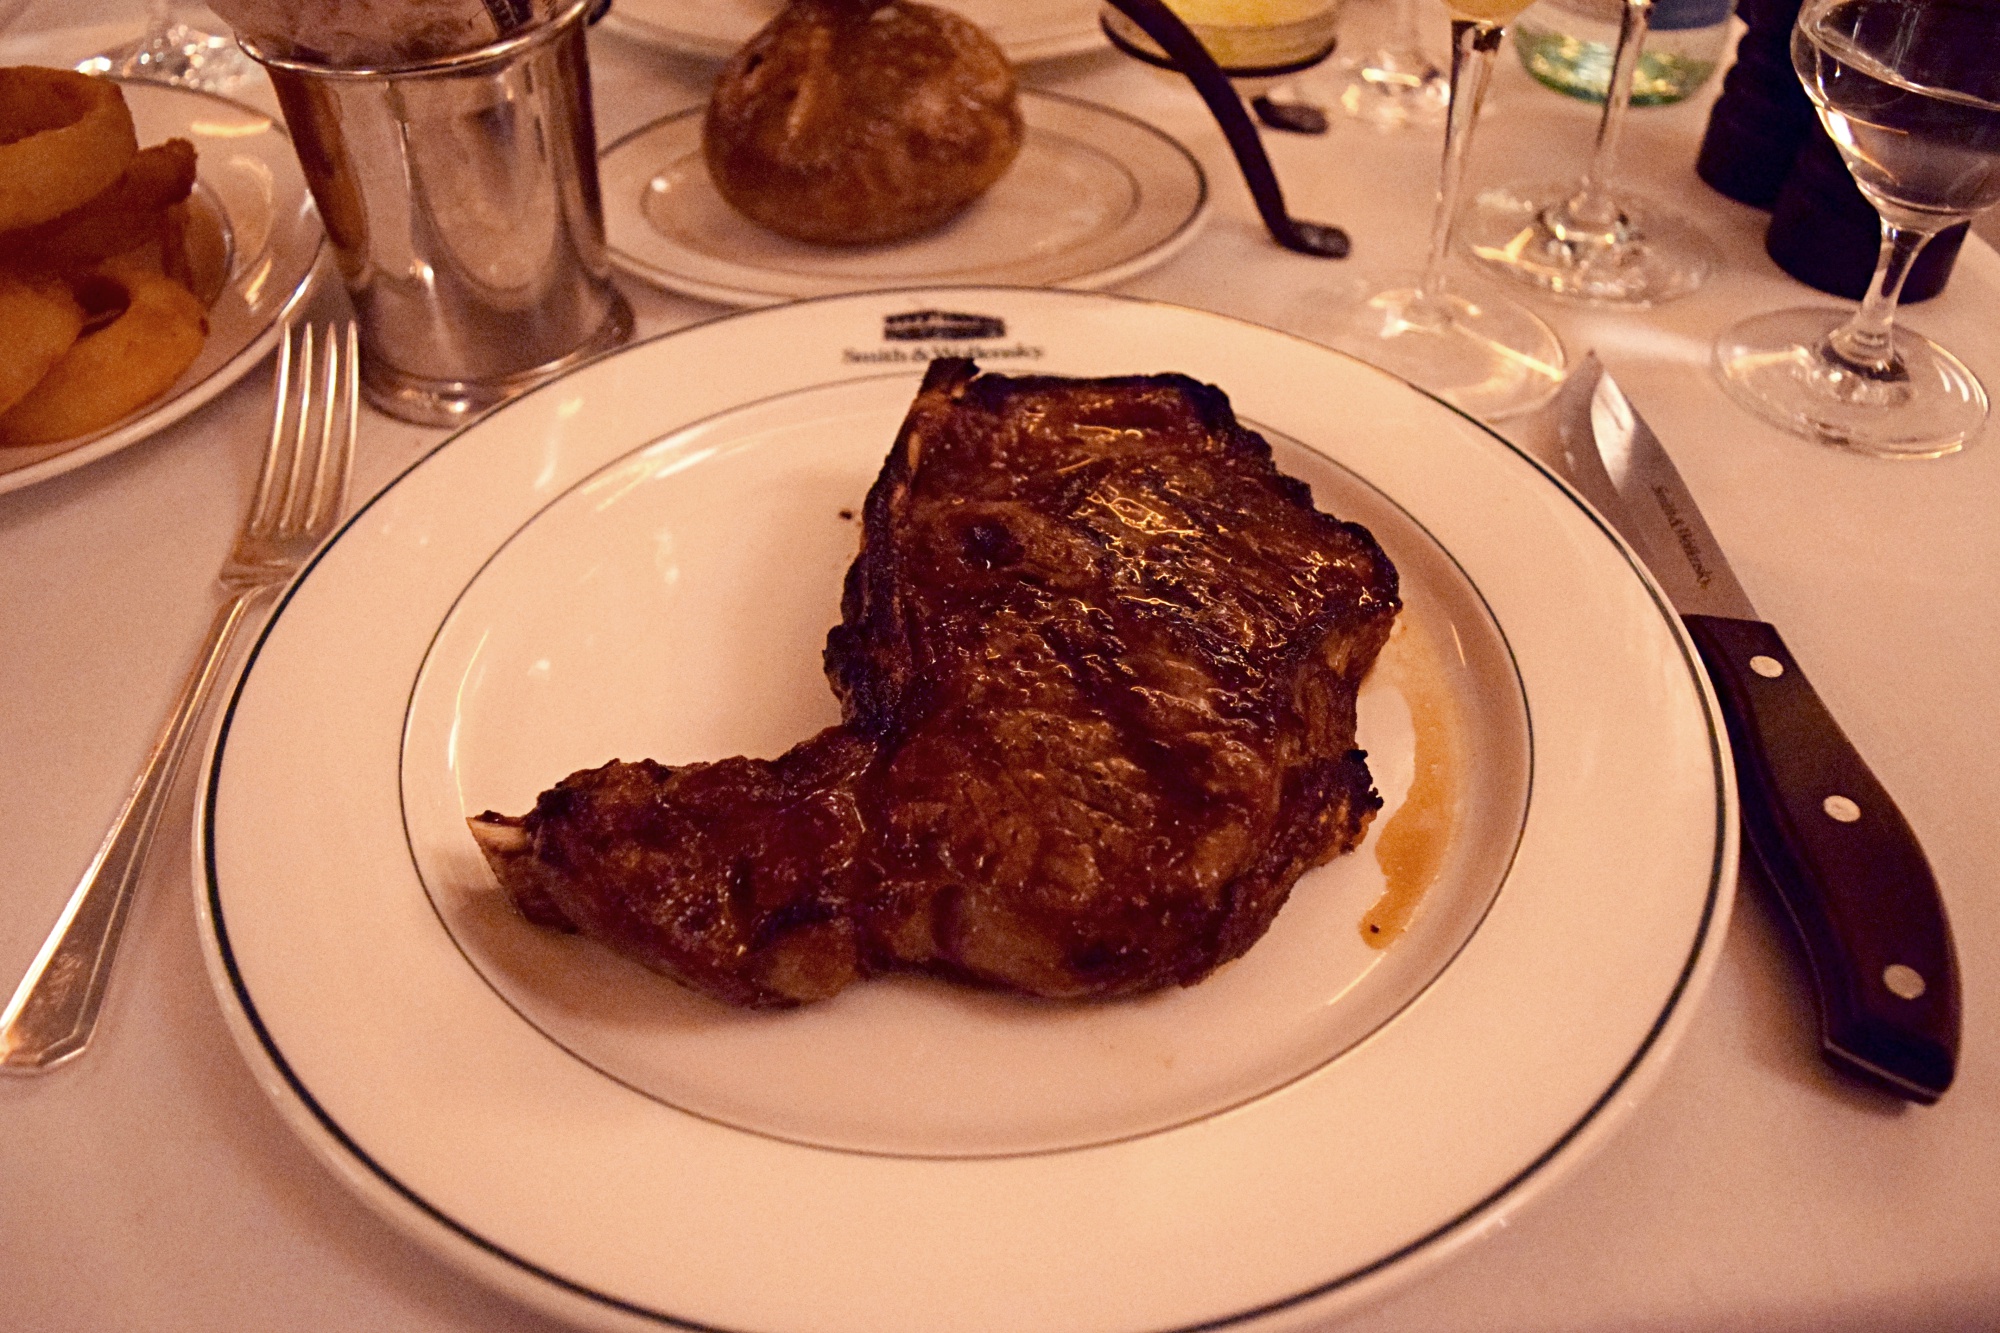 Smith & Wollensky Steak London